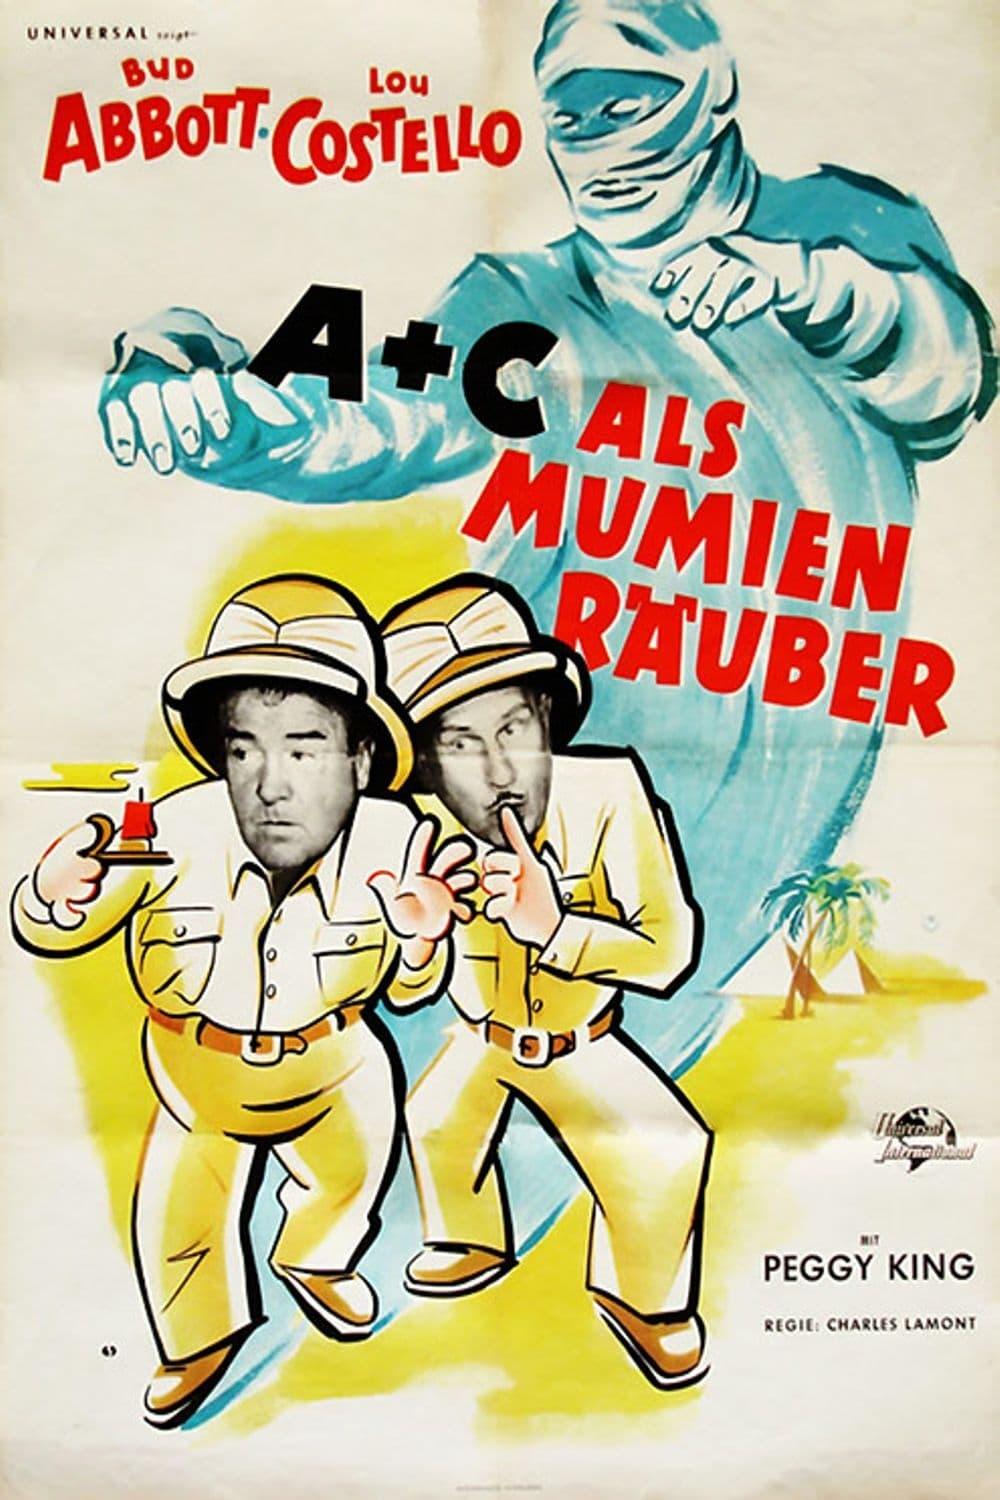 Abbott & Costello als Mumienräuber poster